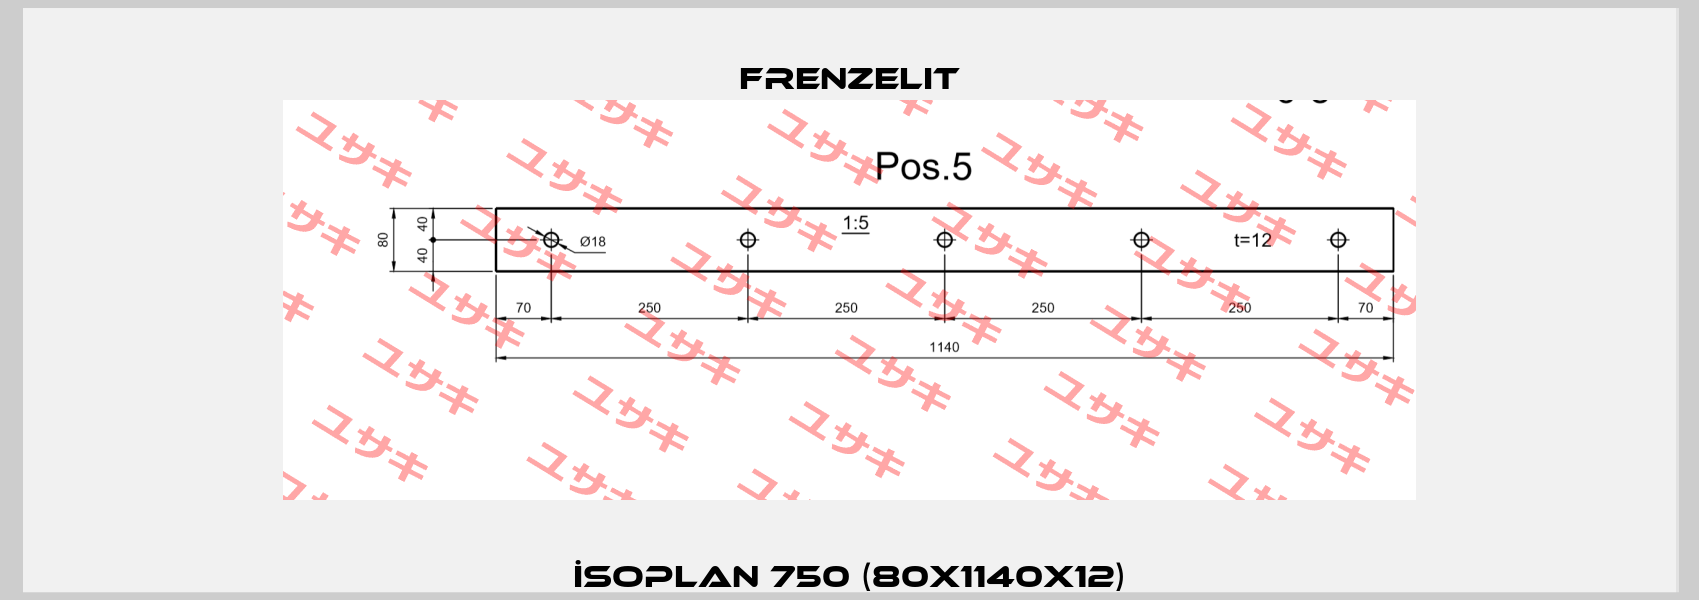 İsoplan 750 (80x1140x12) Frenzelit